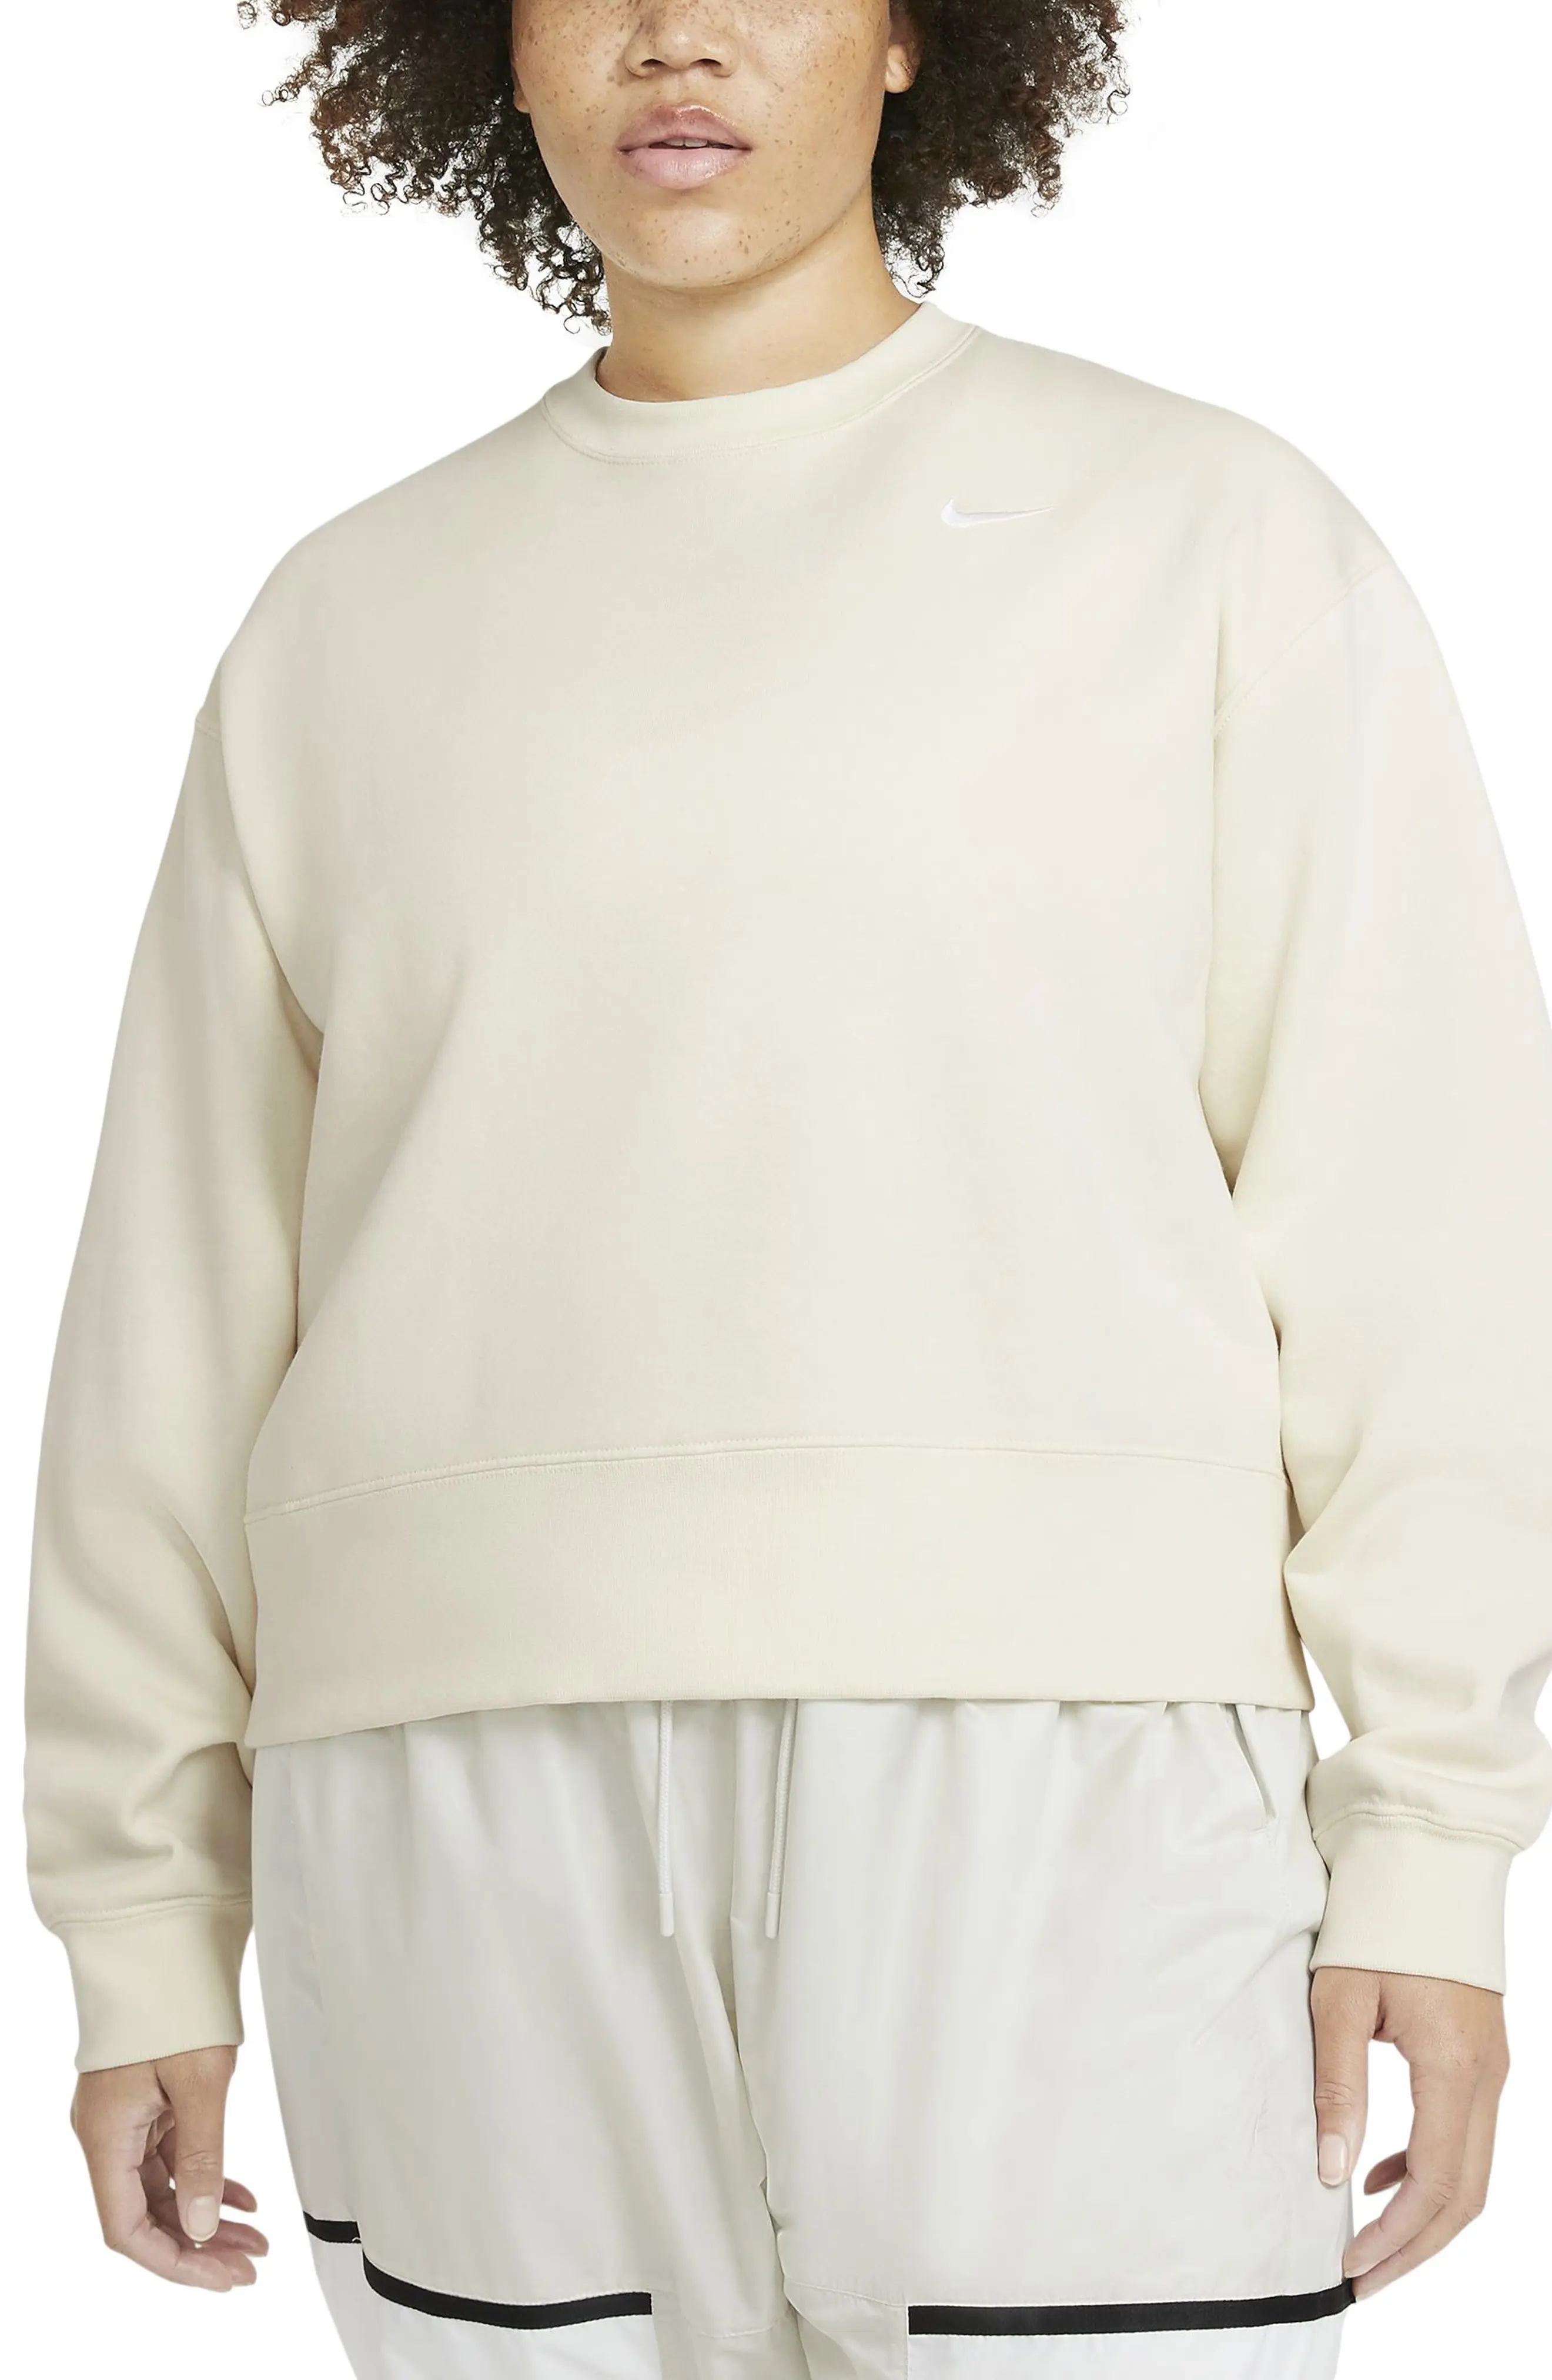 Nike Sportswear Fleece Crewneck Sweatshirt in Coconut Milk/White at Nordstrom, Size 3X | Nordstrom